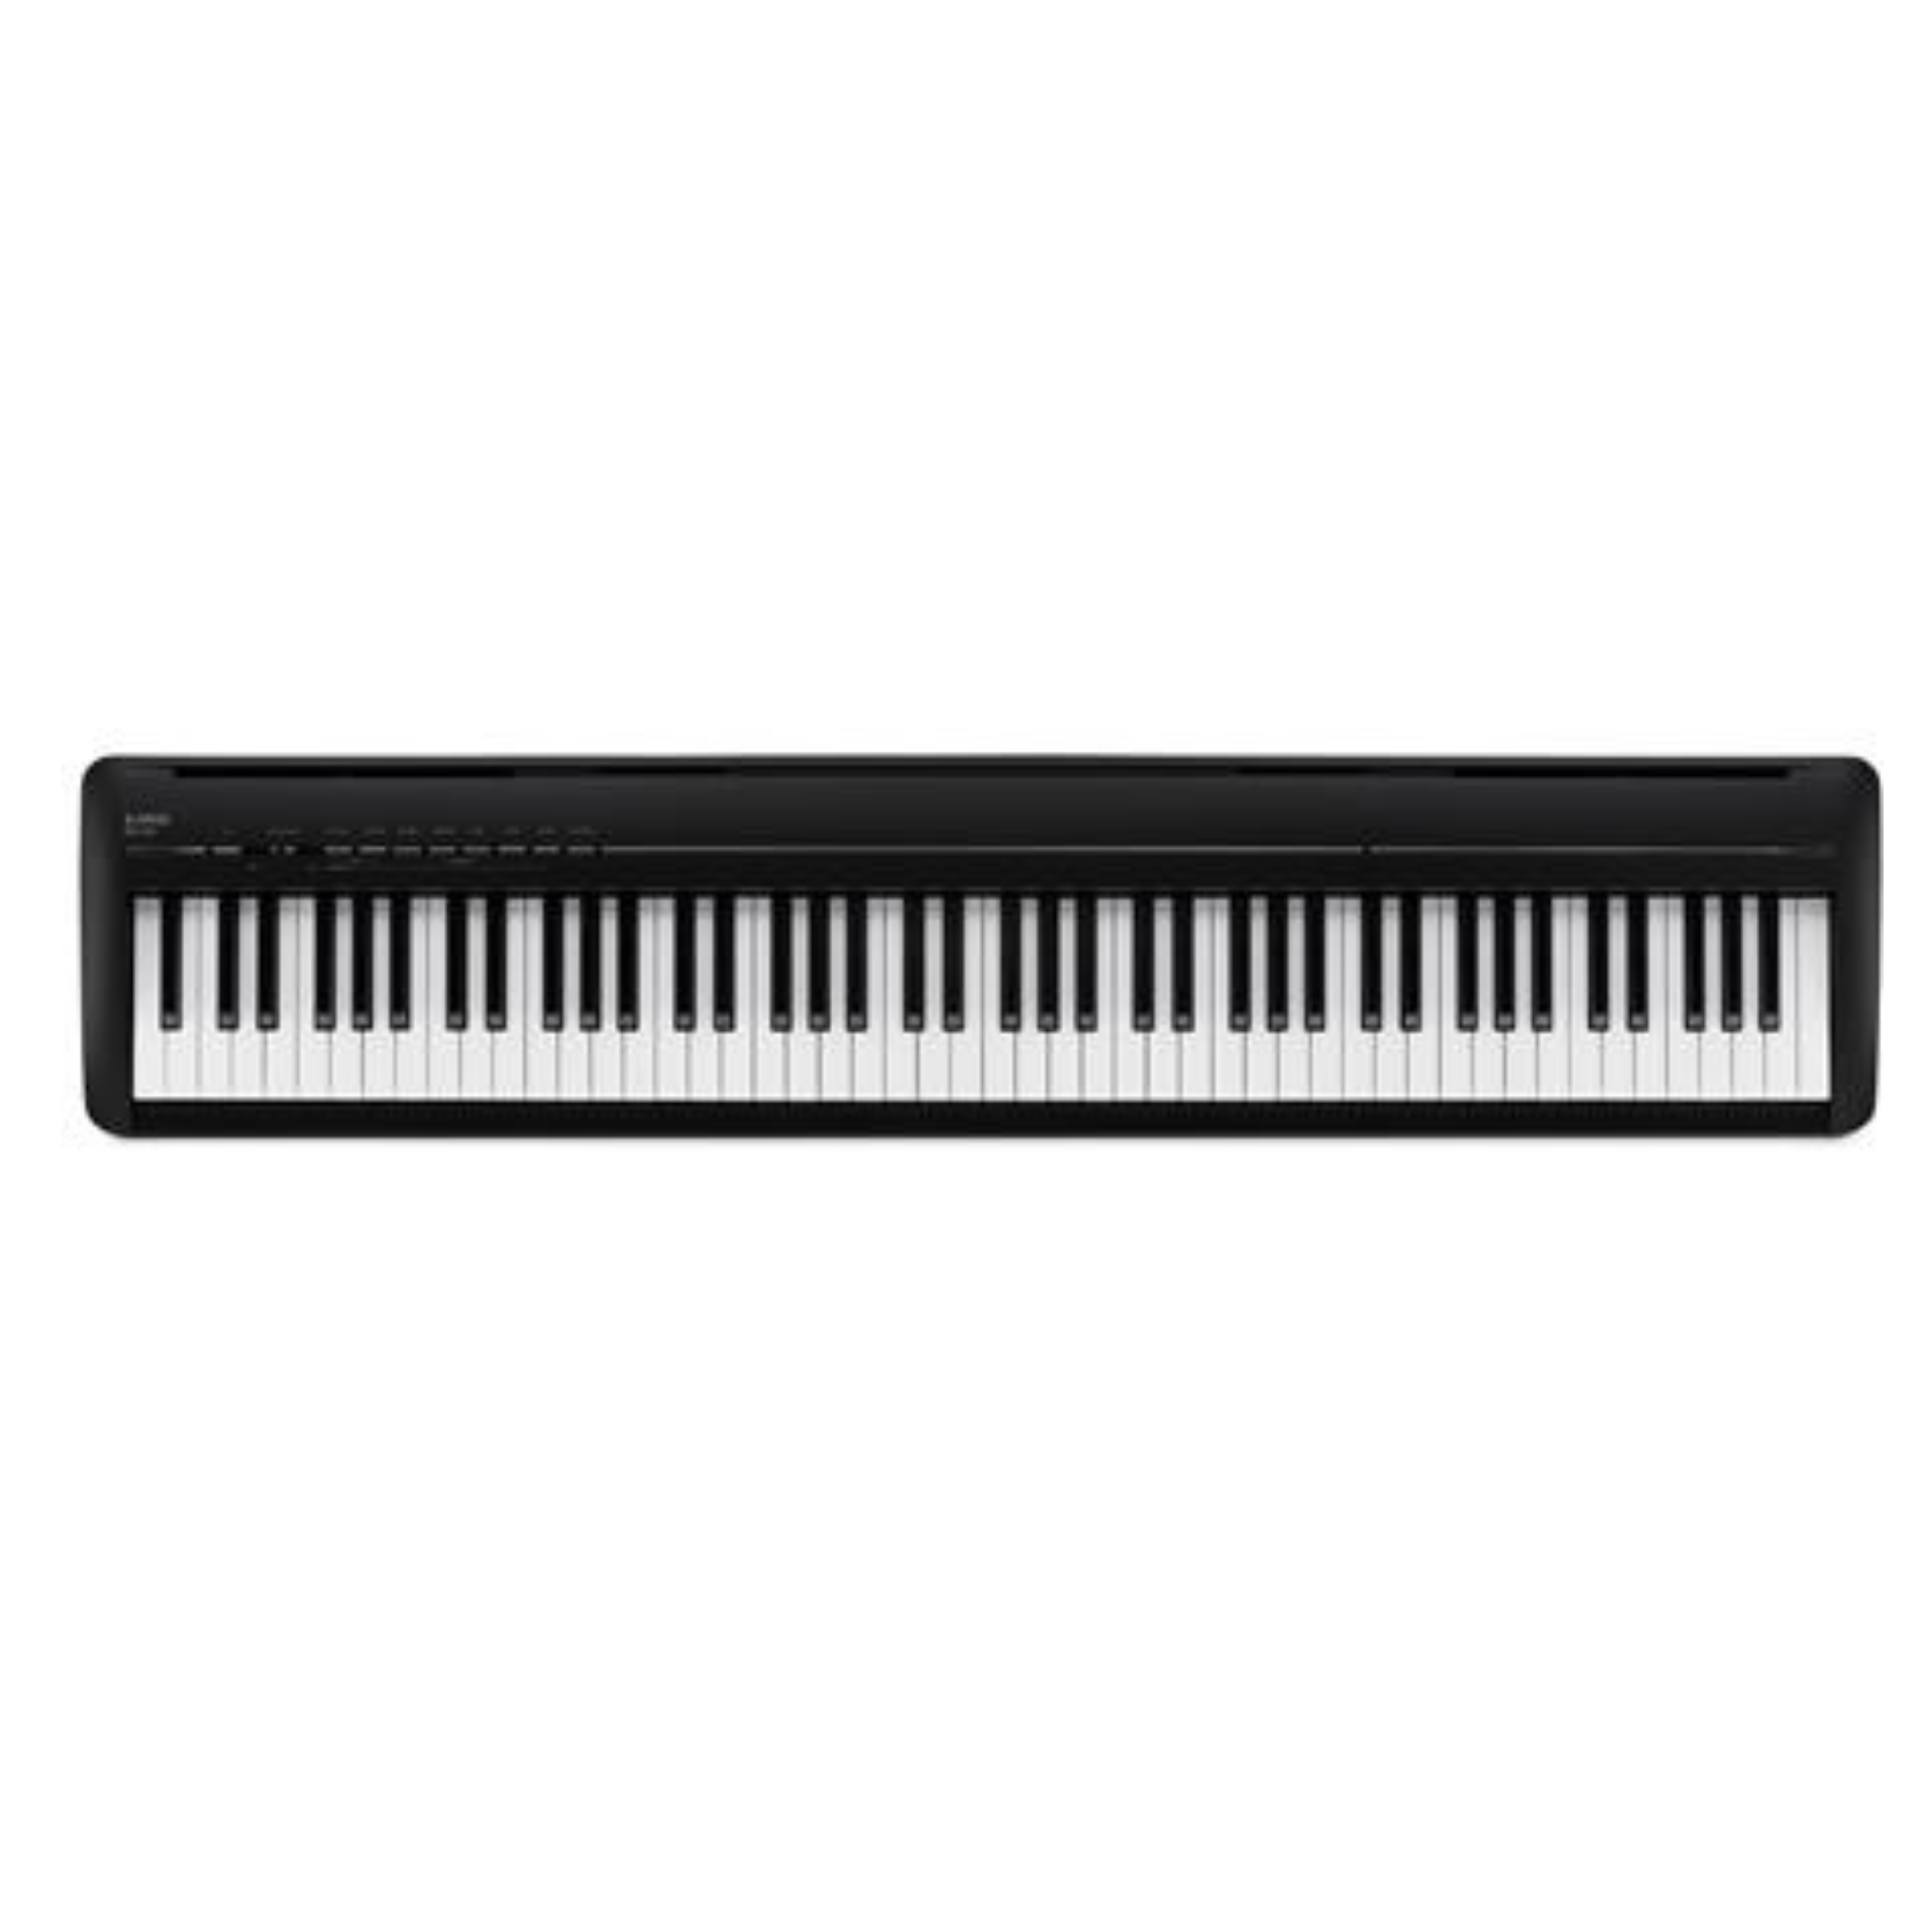 Kawai ES120 88-Key Portable Digital Piano with Speakers